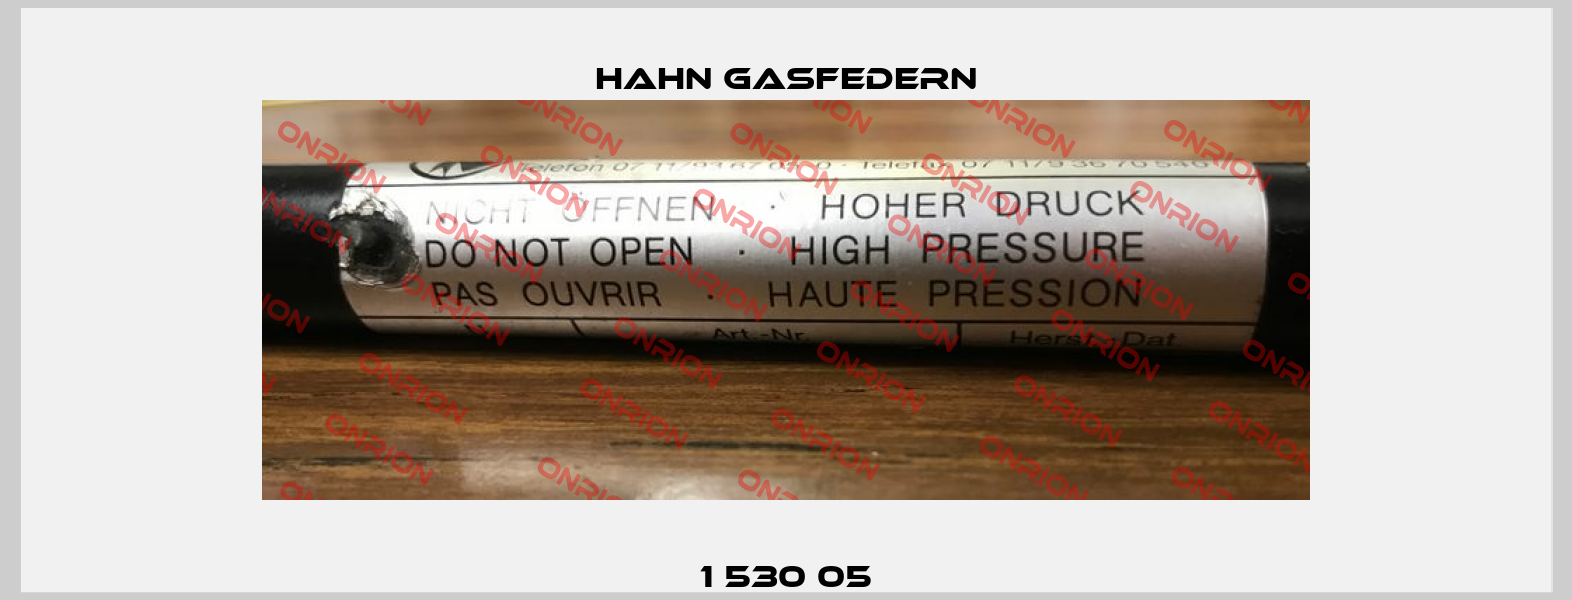 1 530 05 Hahn Gasfedern